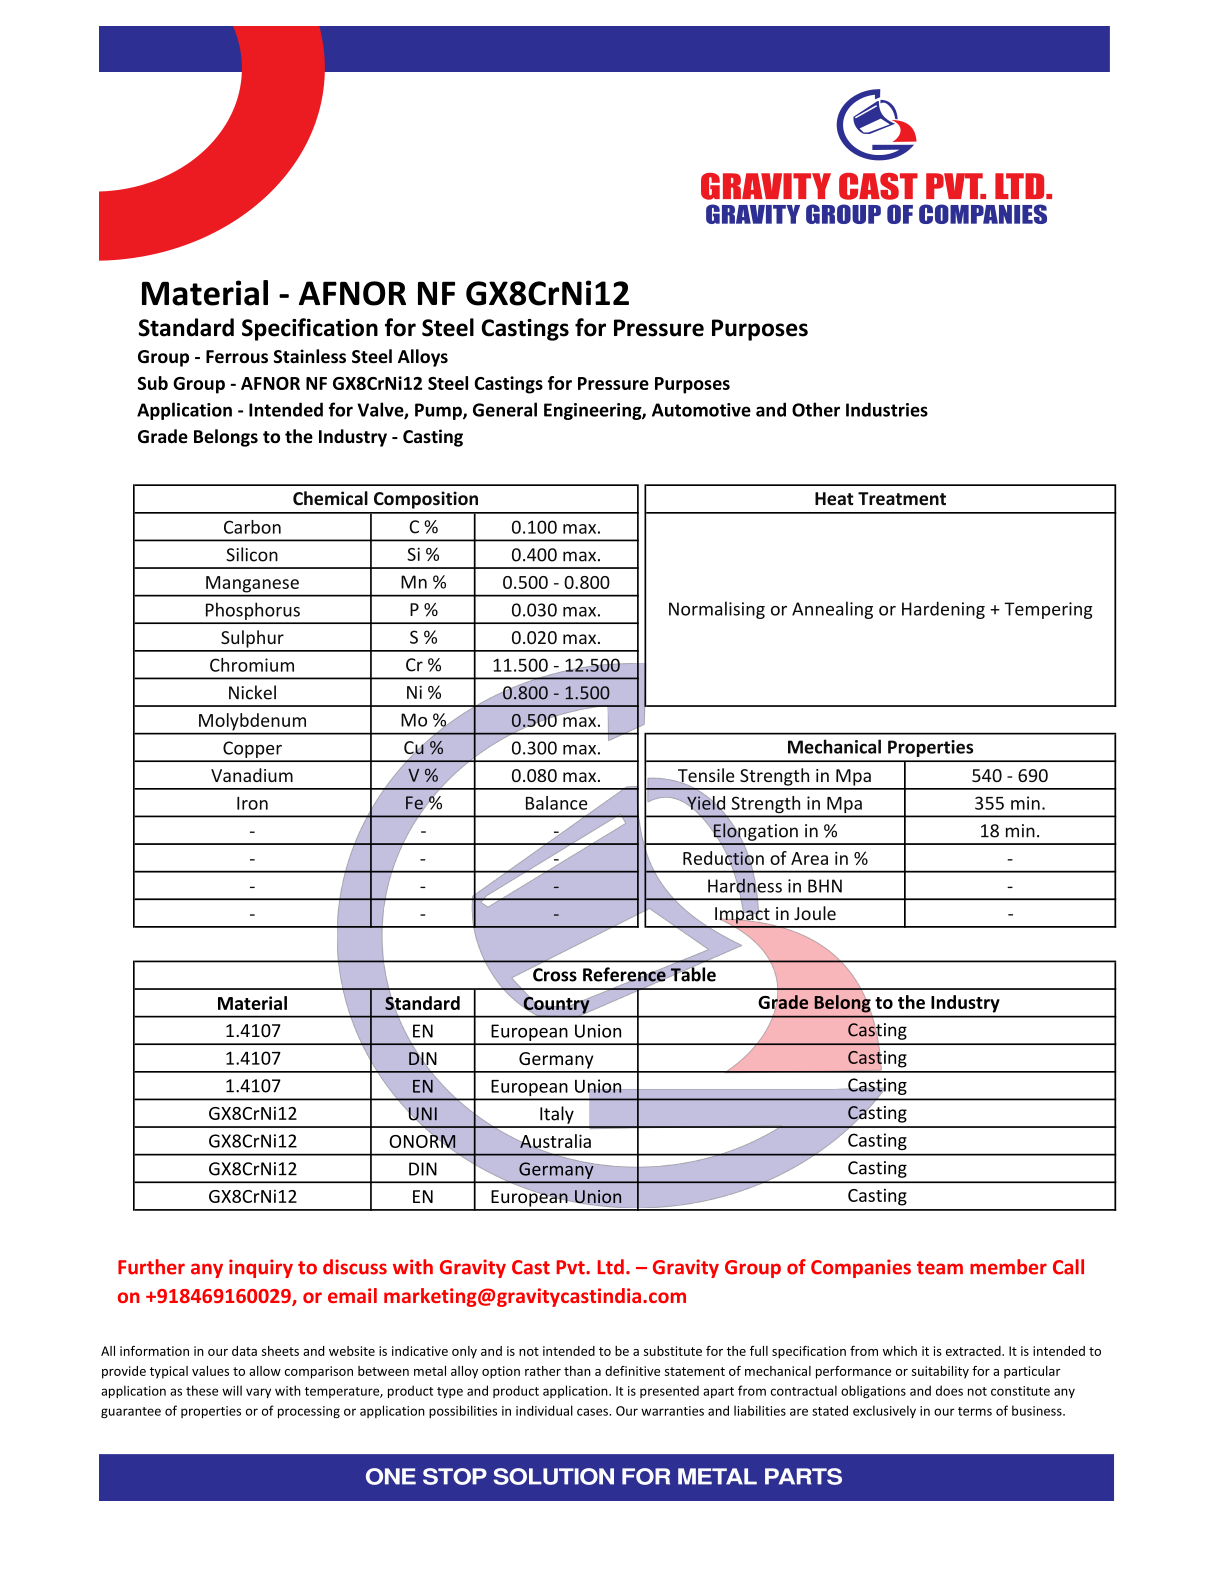 AFNOR NF GX8CrNi12.pdf